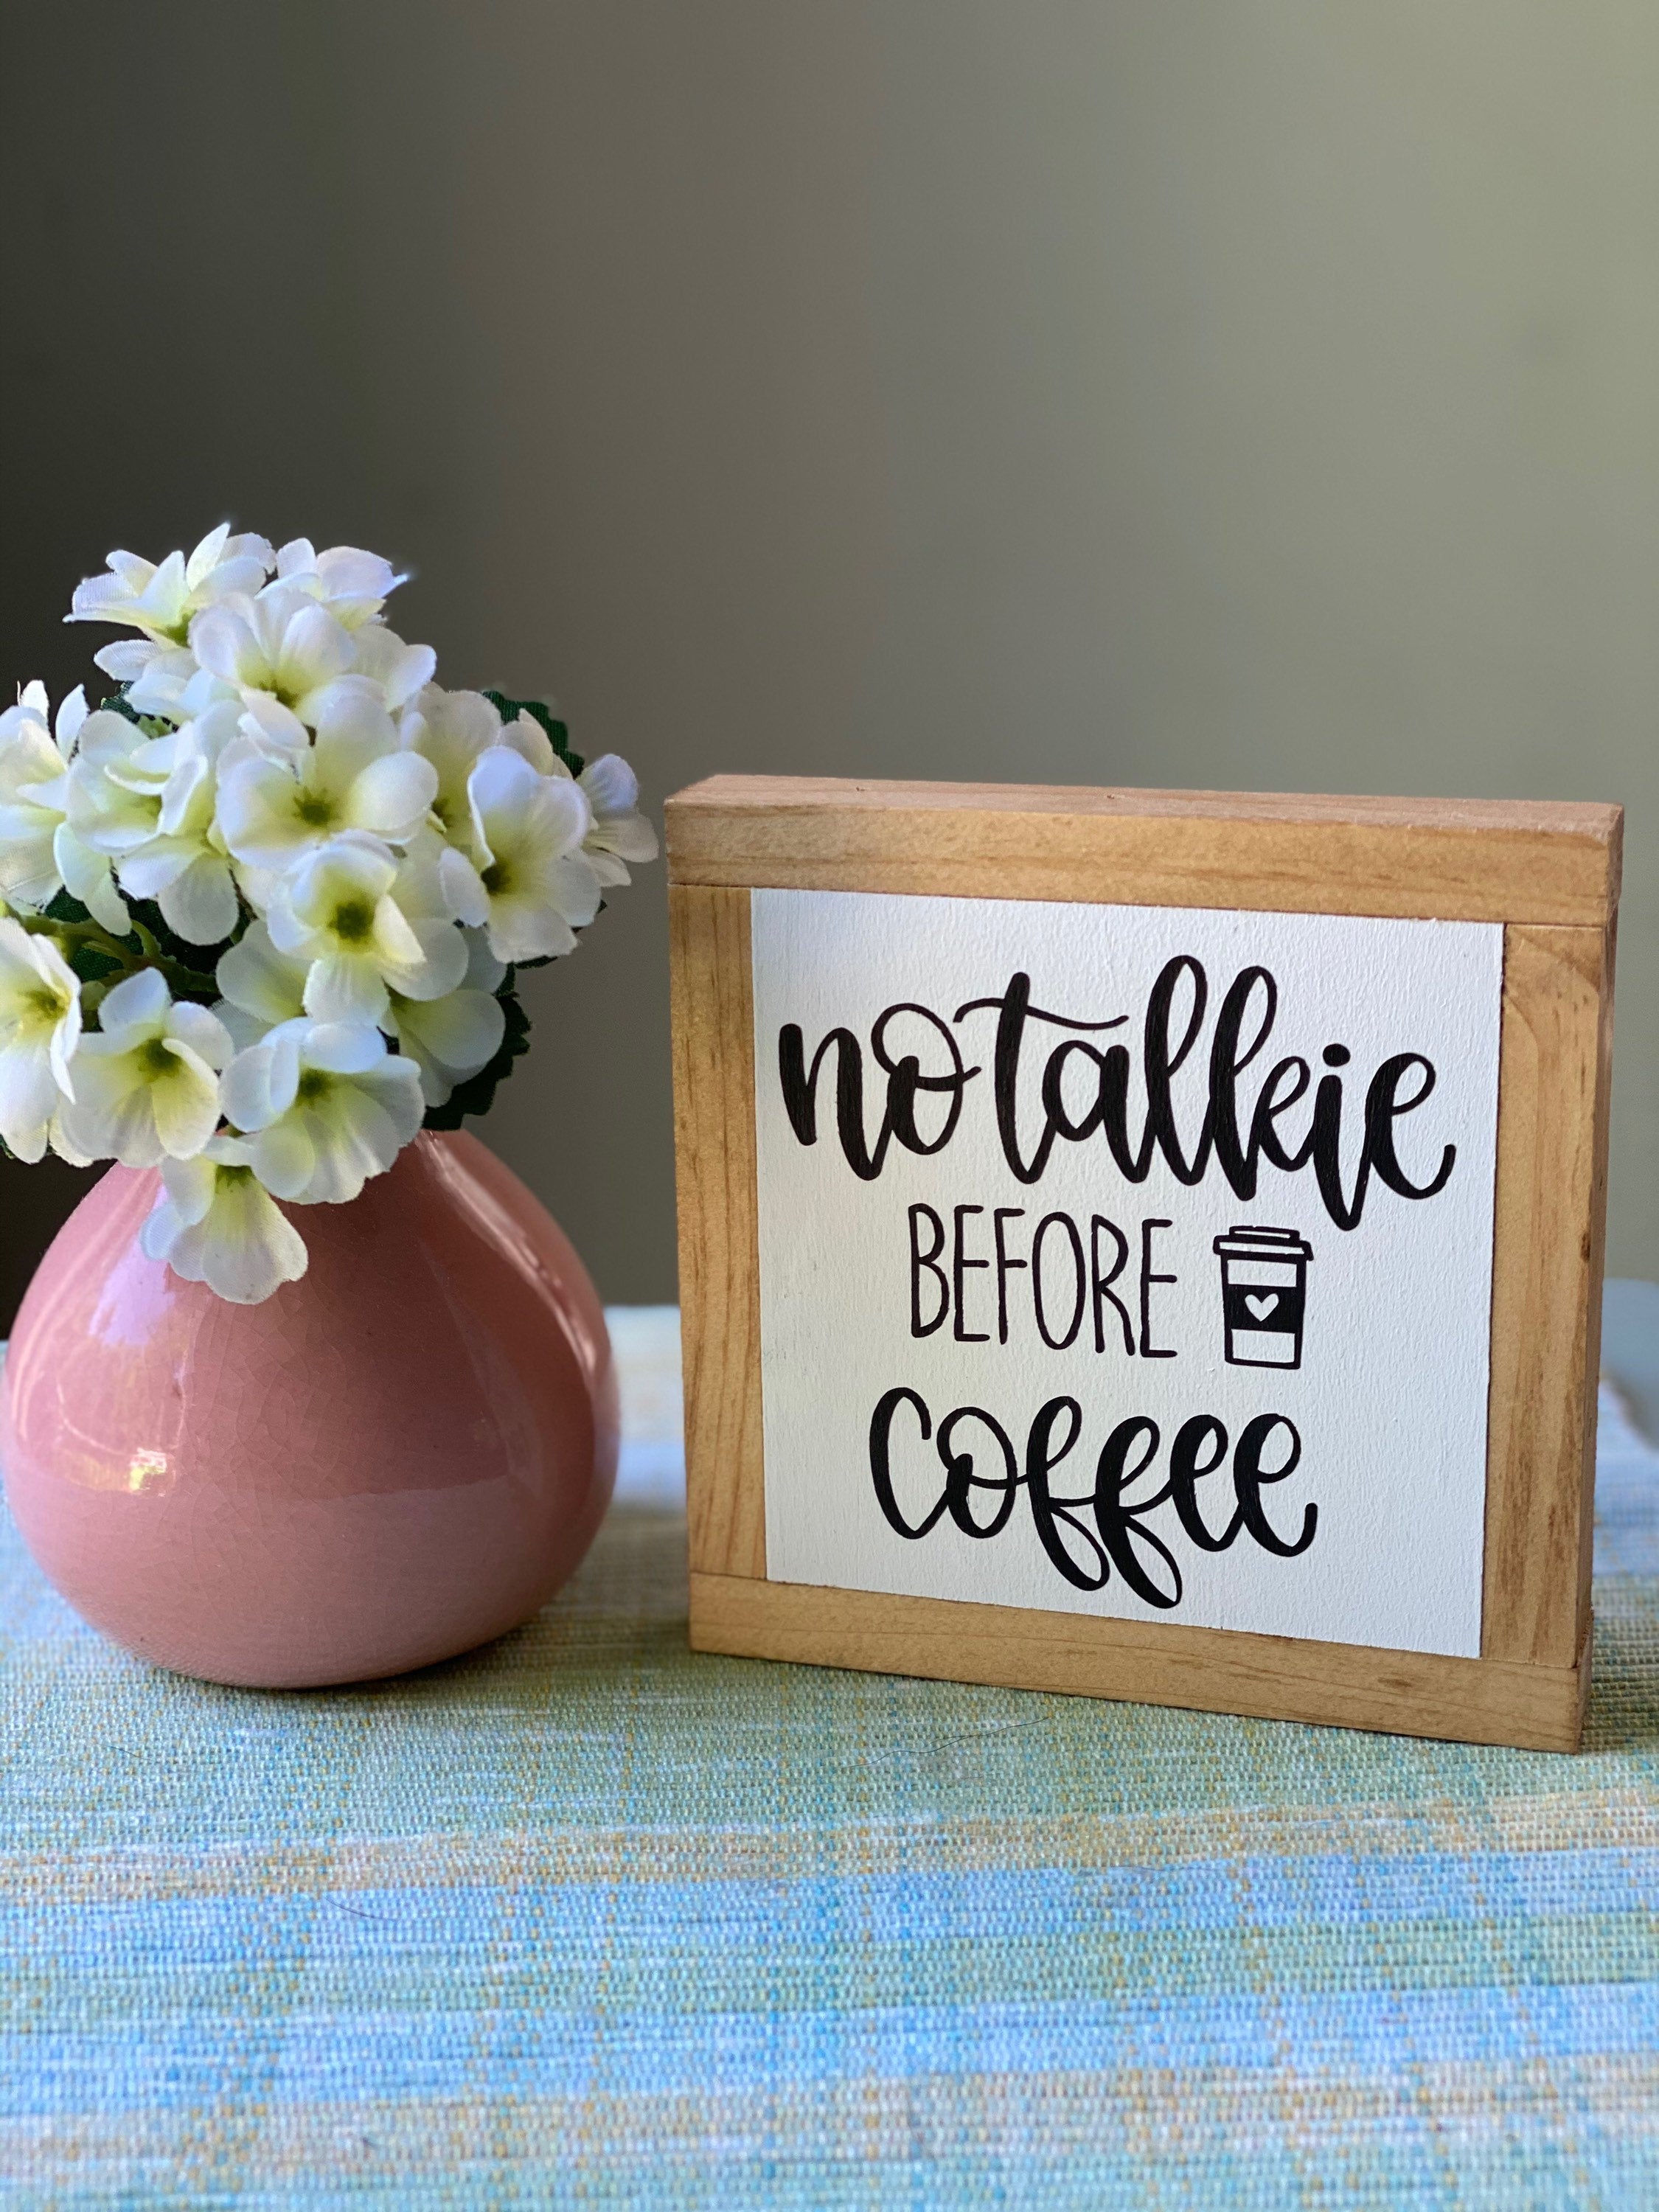 No Talkie Before Coffee Stencil by StudioR12, Kitchen Cafe